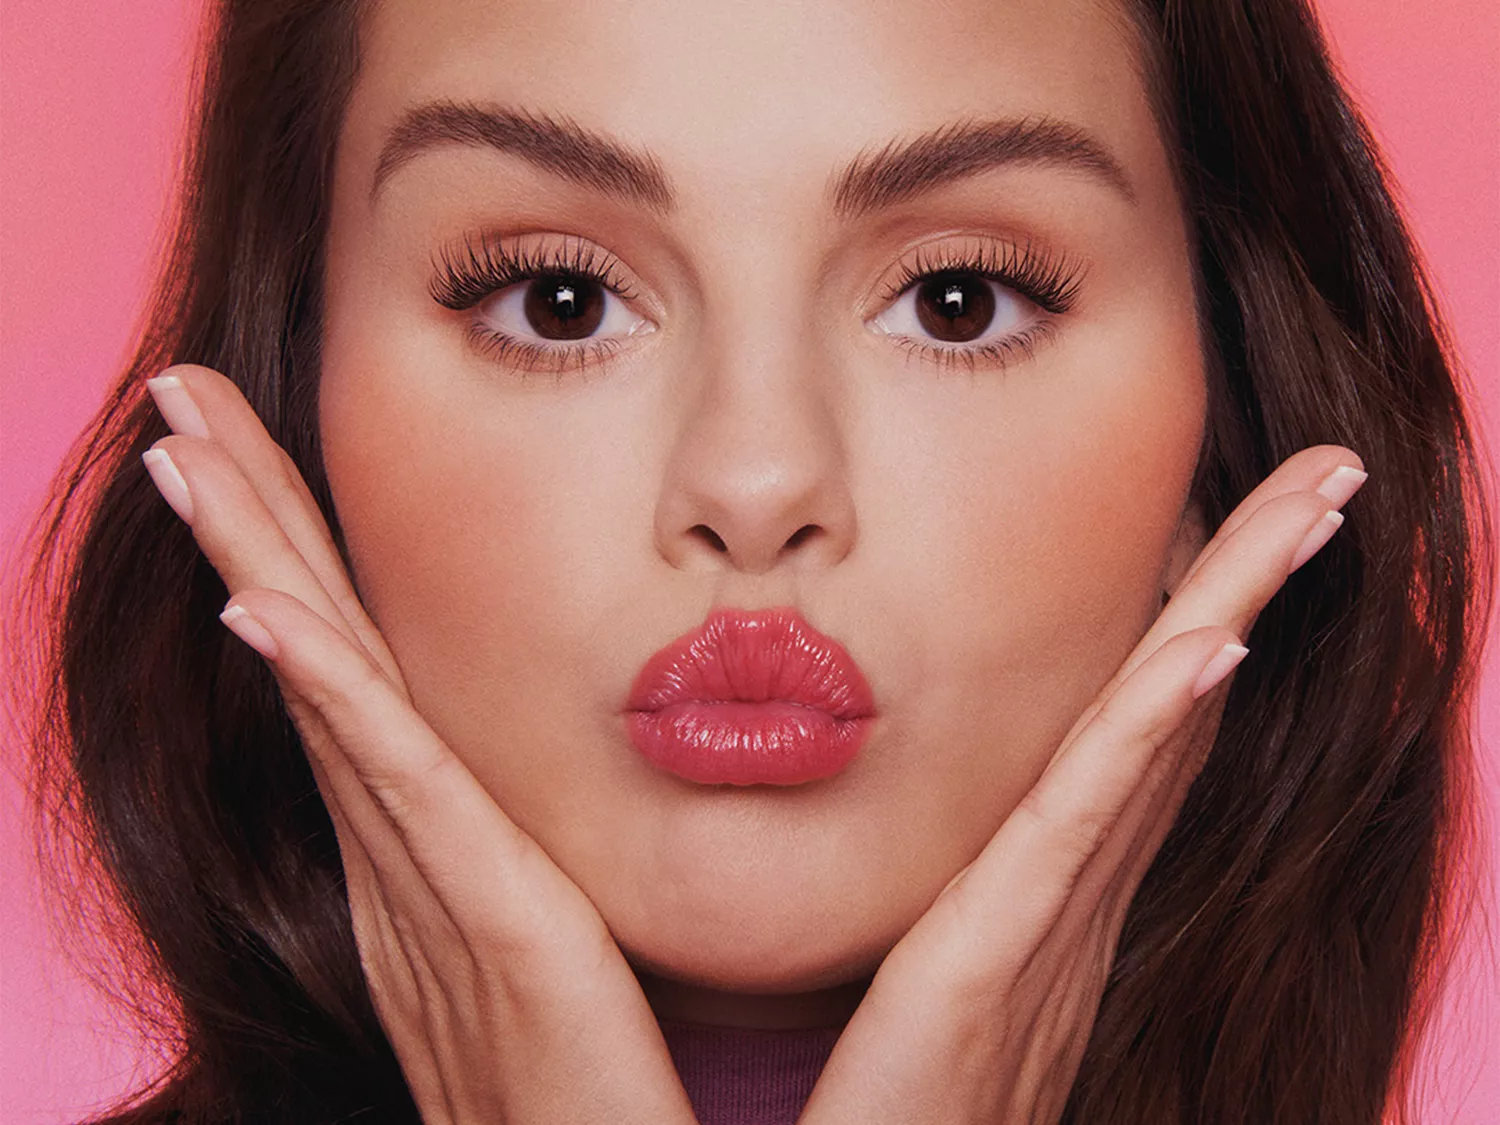 Selena Gomez wearing the Rare Beauty lip oil 